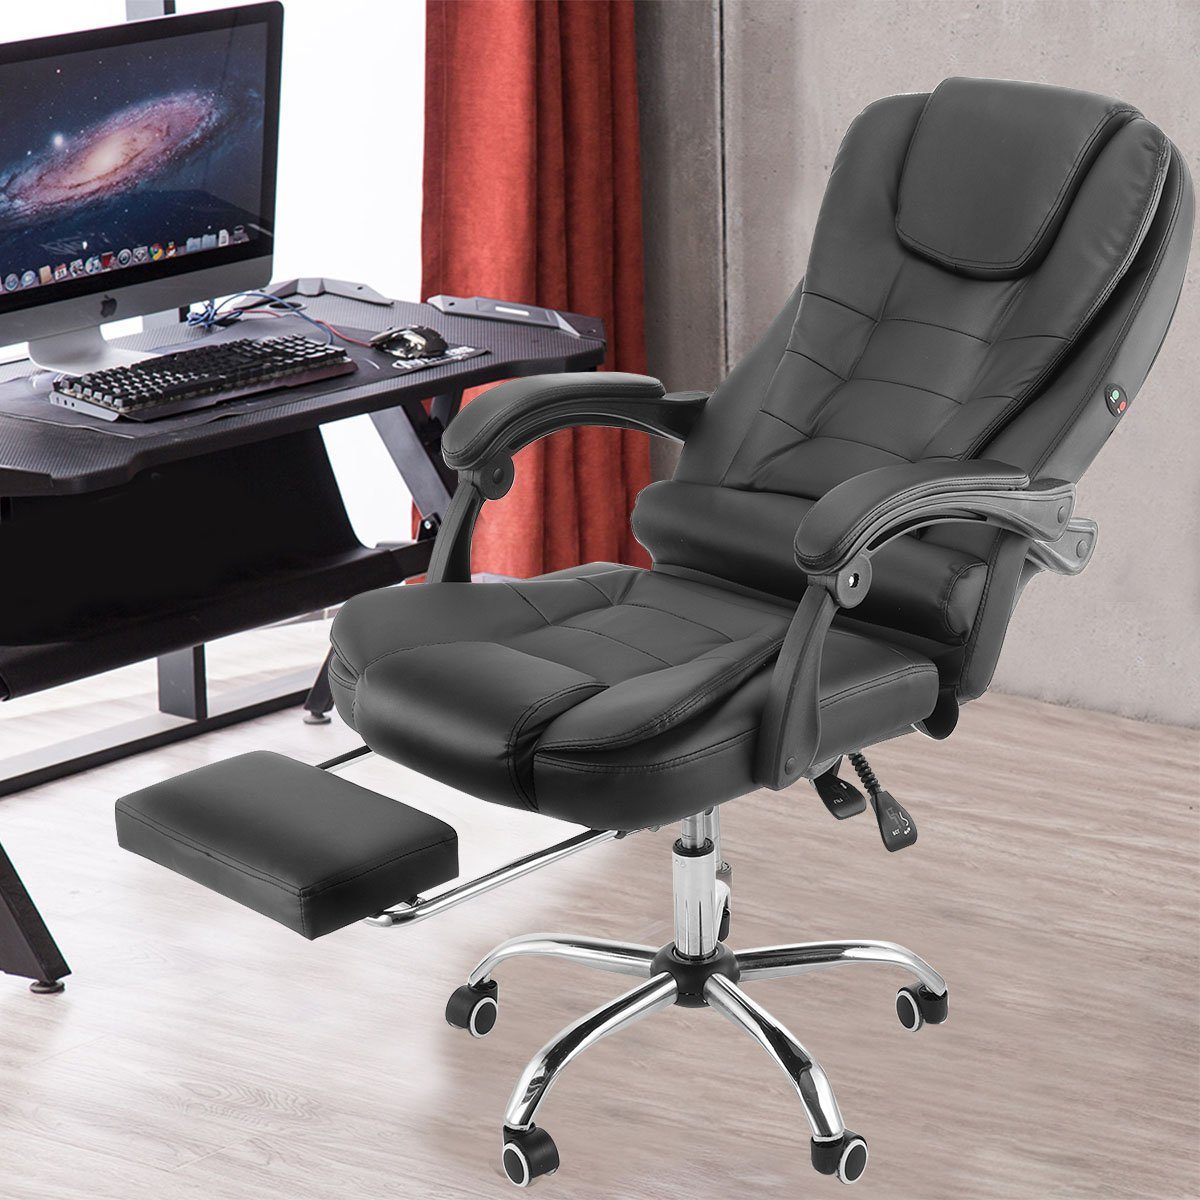 LETGOSPT Bürostuhl Gaming Stuhl Massage Bürostuhl Chefsessel Gamer Ergonomischer Stuhl, Einstellbare Armlehne Einteiliger Stahlrahmen, Gepolstert Drehsessel Bürostuhl mit Fußstützen